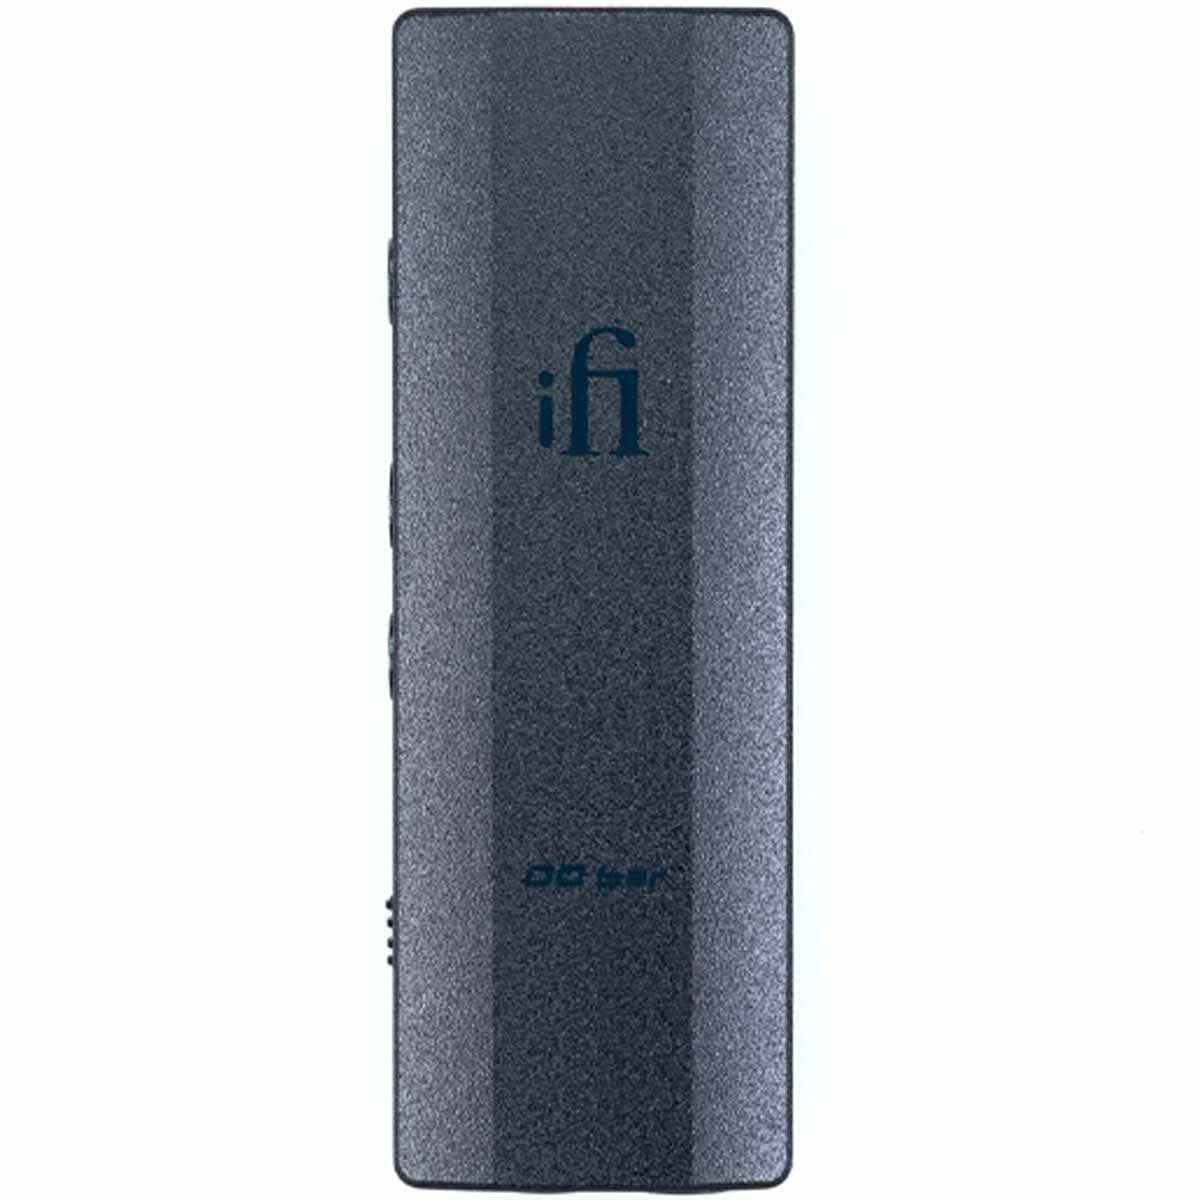 iFi GO Bar Portable Headphone Amp & DAC - front view